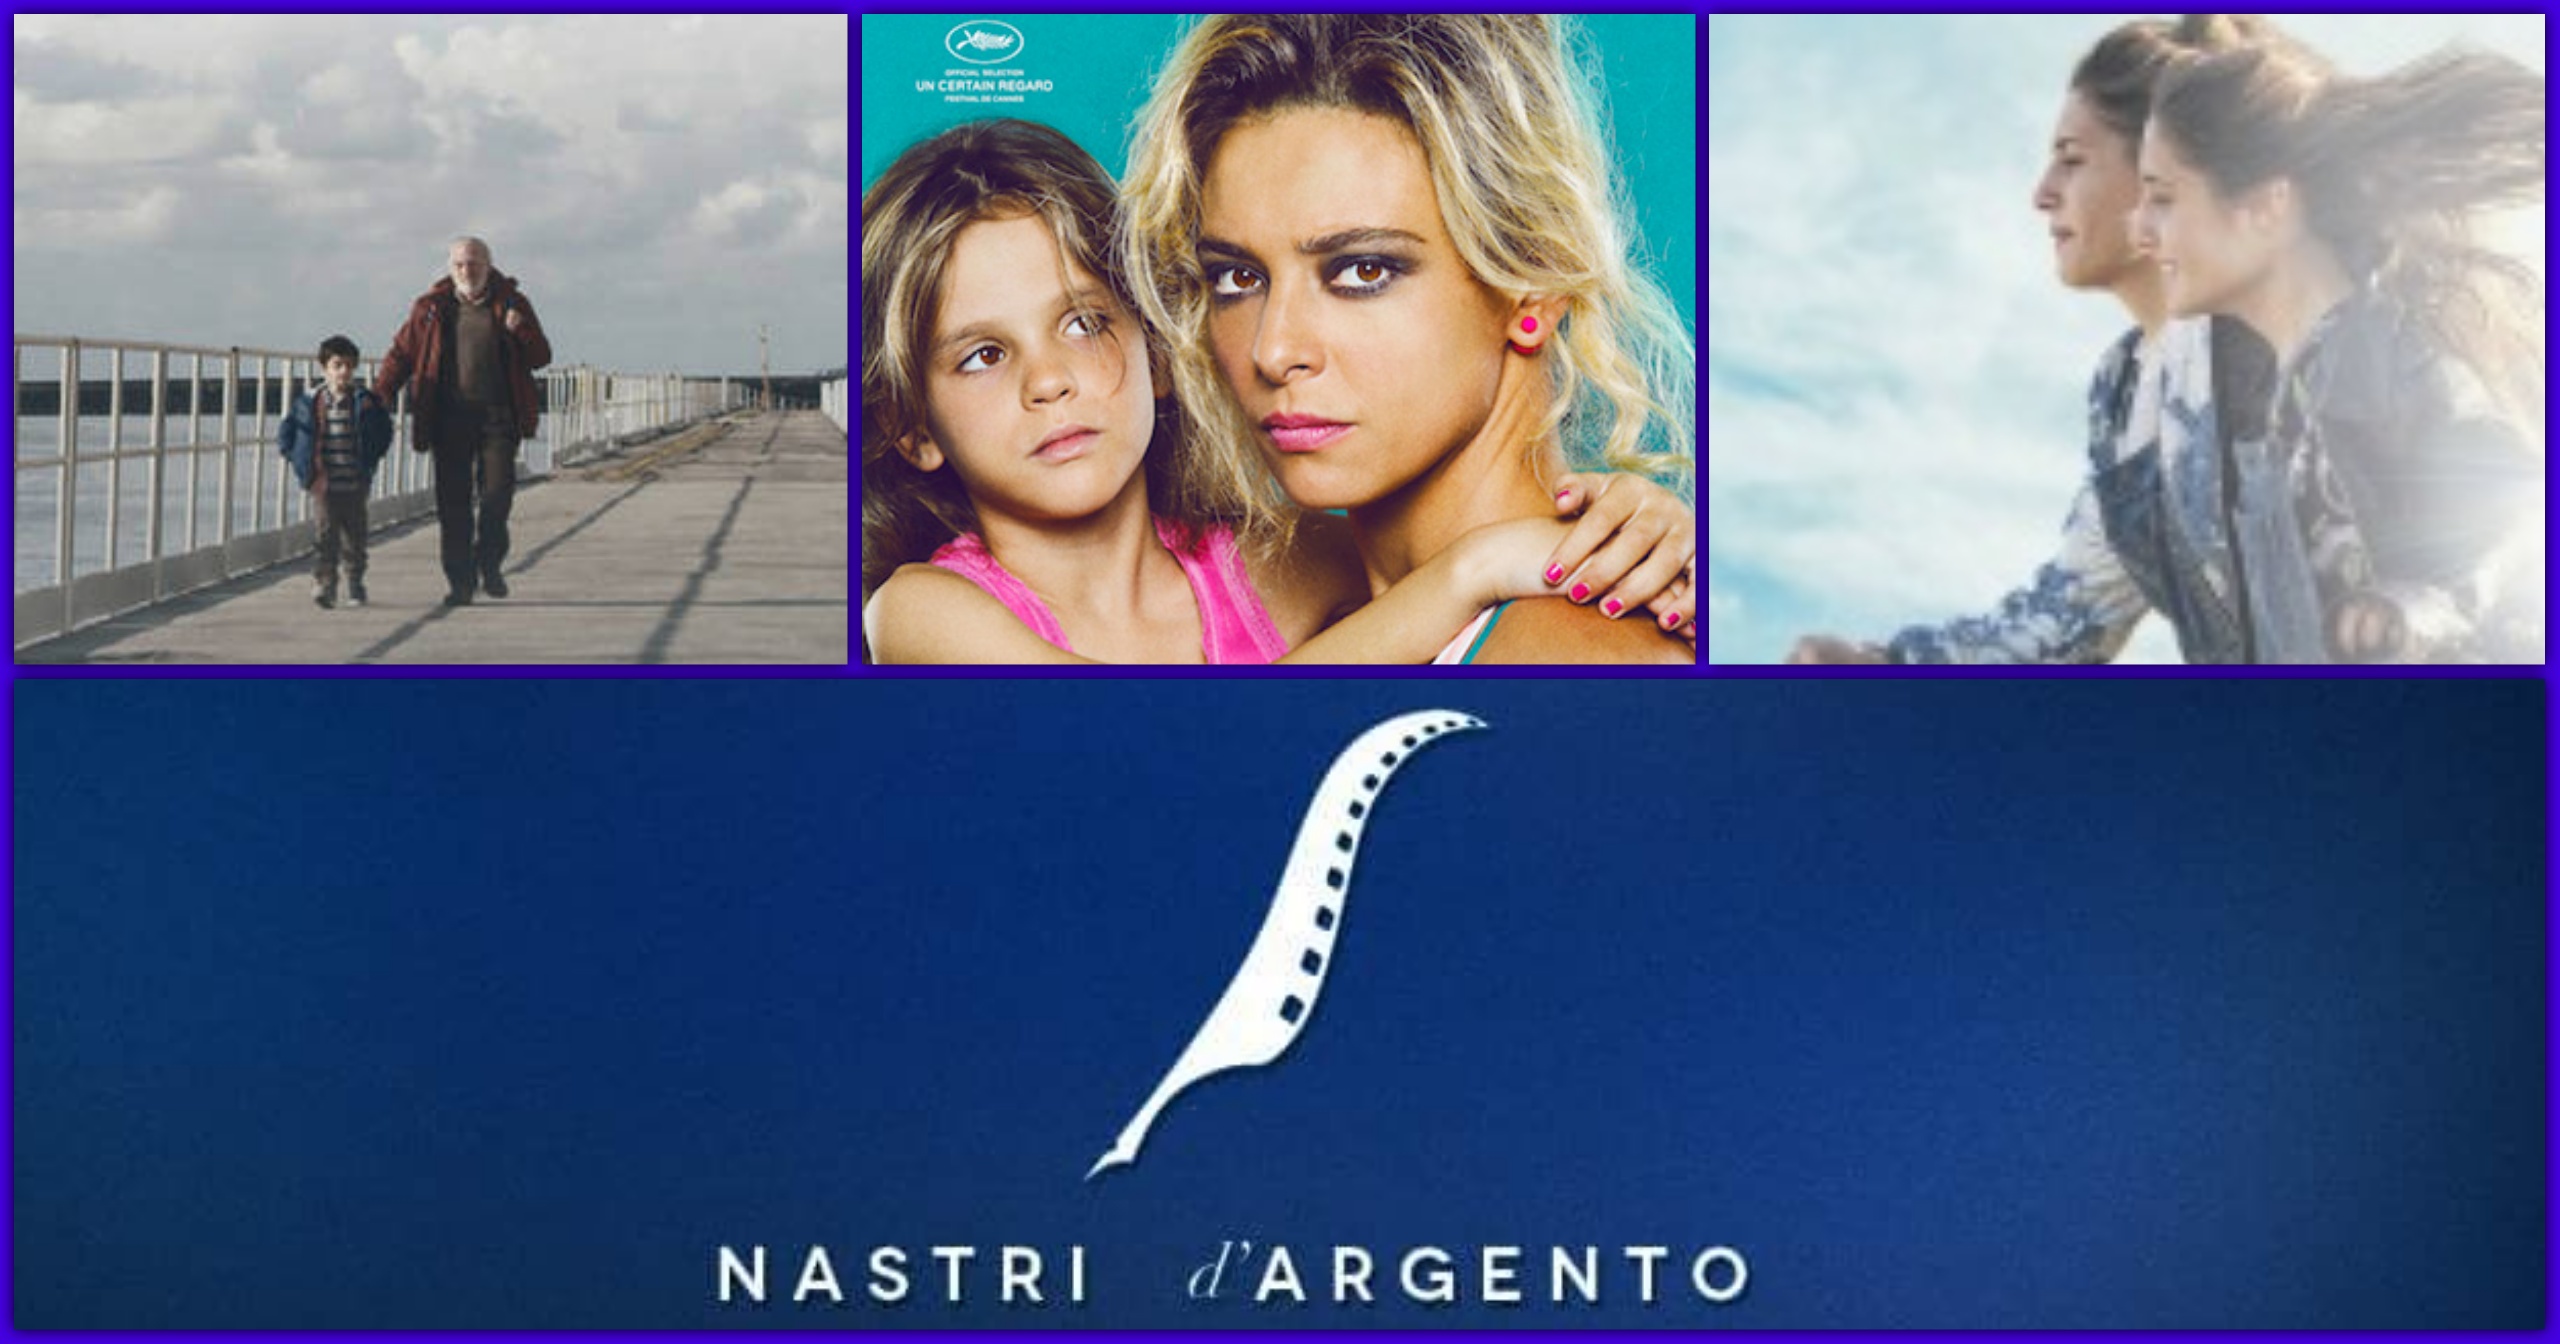 Nastri d'Argento 2017 - Nomination